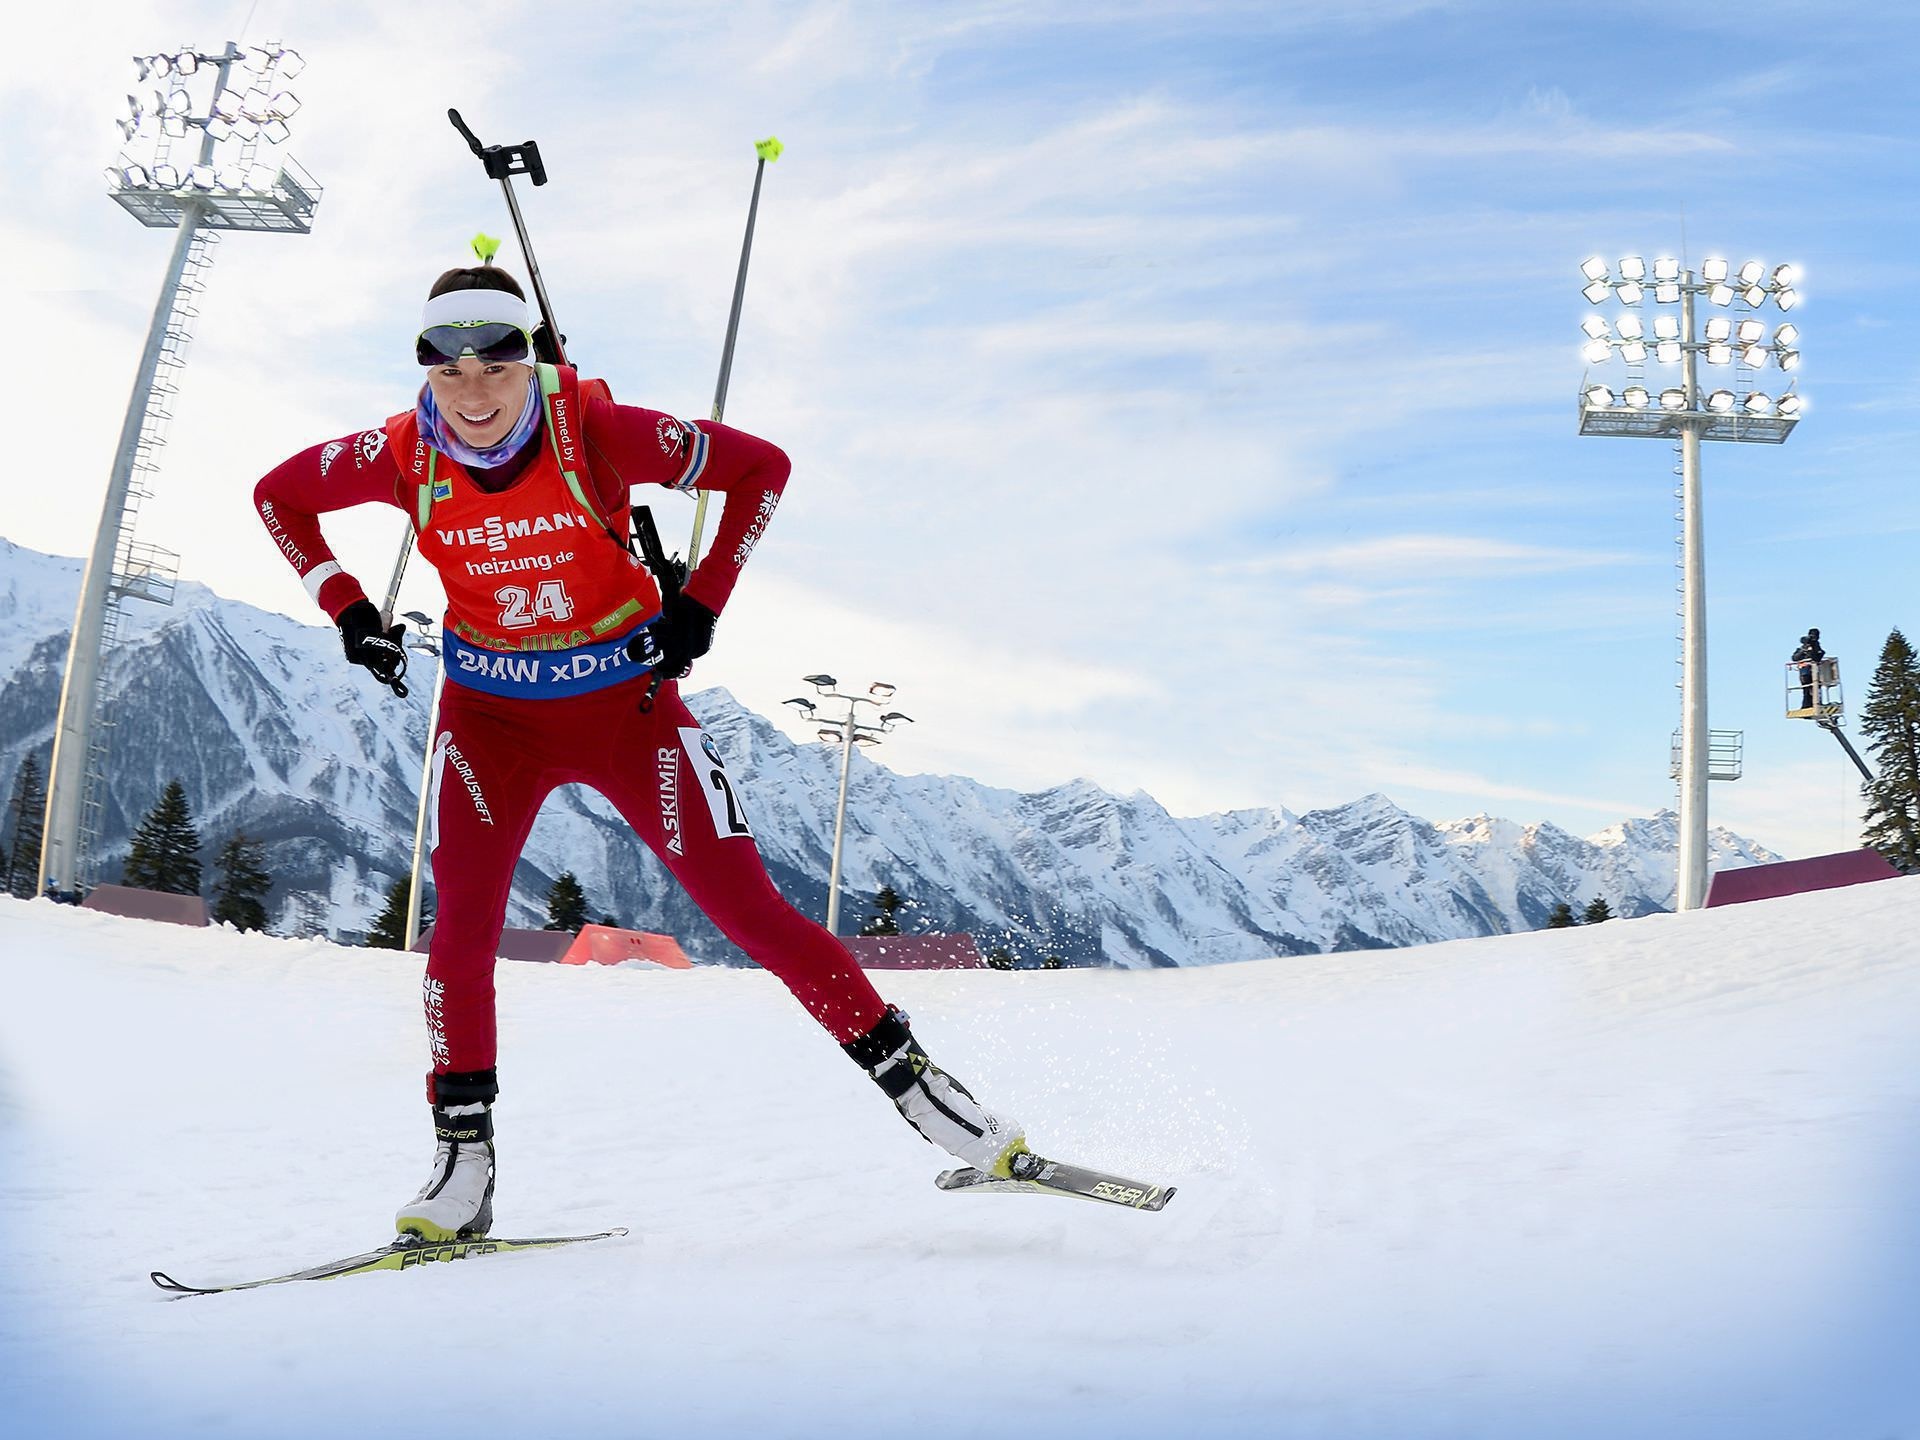 Biathlon: Individual race, The target range shooting, Skiing, IBU. 1920x1440 HD Wallpaper.